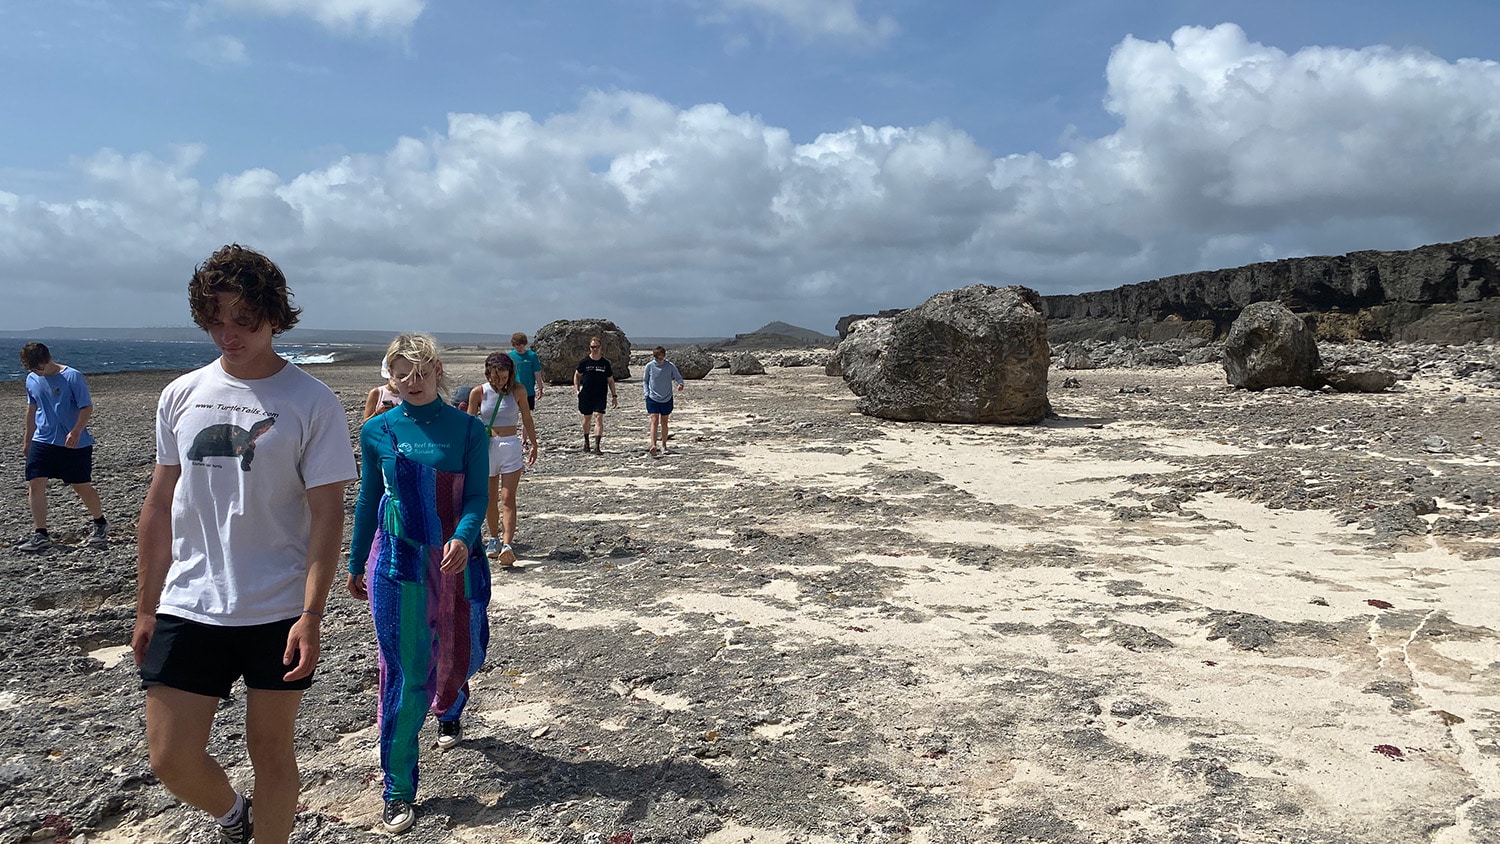 Students walk along the beach in Bonaire